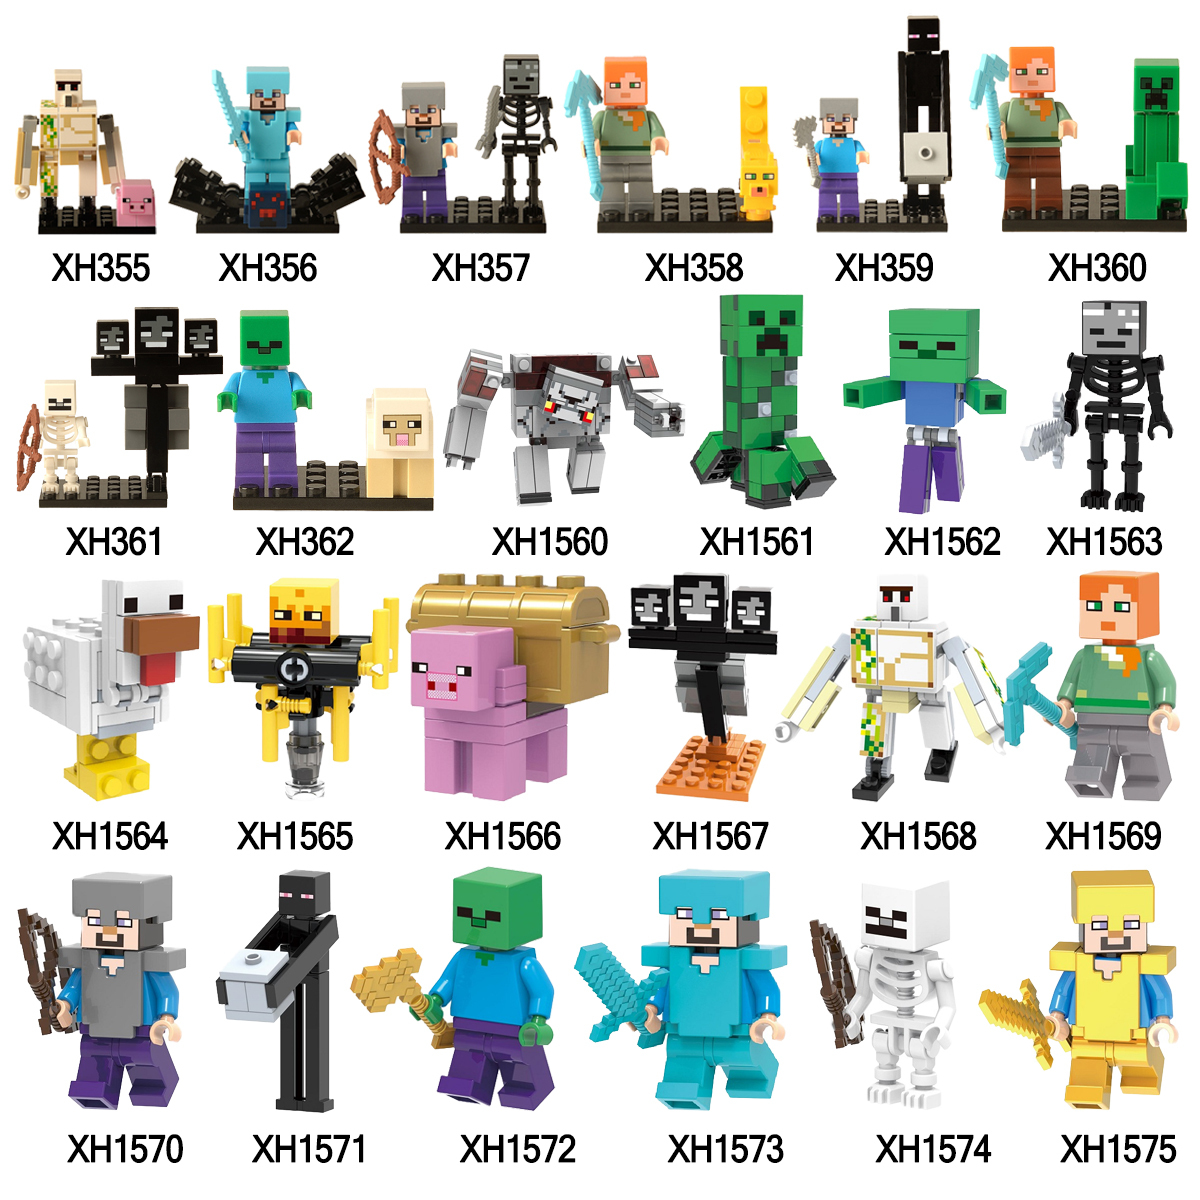 X0127 X0294 X0295  XH 1568 1569 1570 1571 1572 1573 1574 1575  Mine Craft Steve Alex Agent NPC Building Blocks Bricks Gift Figures For Kids Toys 